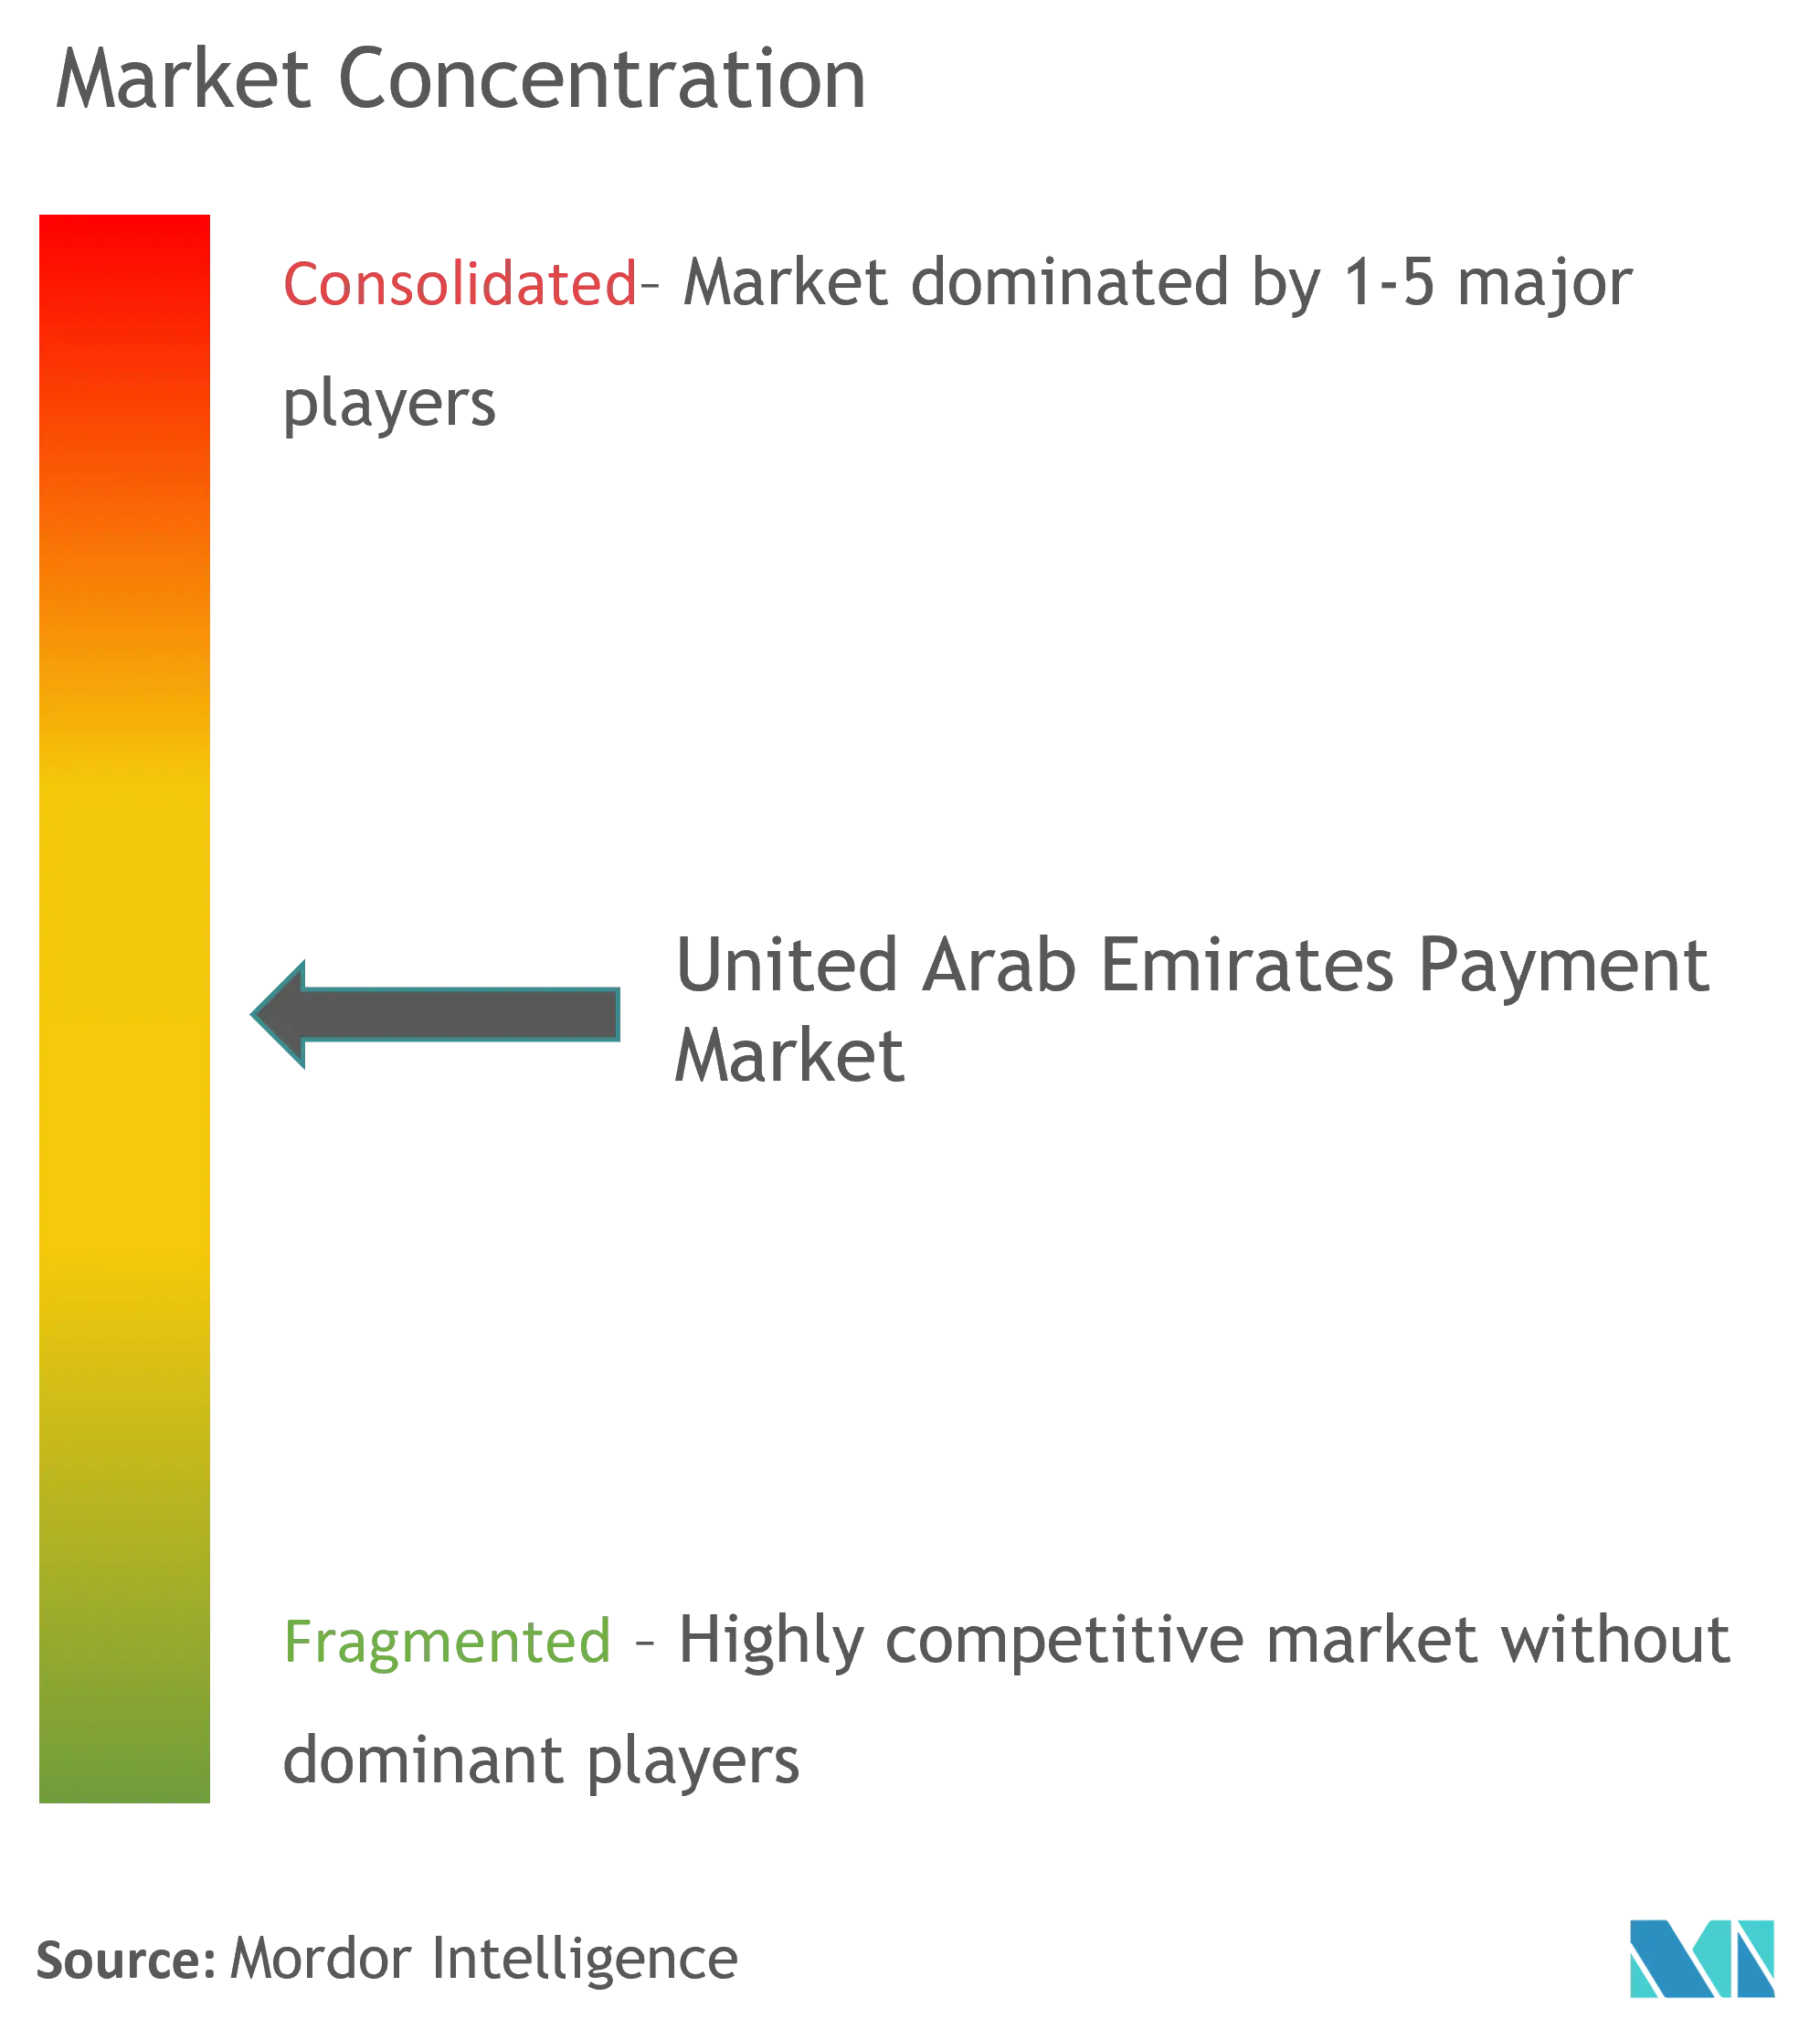 United Arab Emirates Payment Market - Market Concentration.png